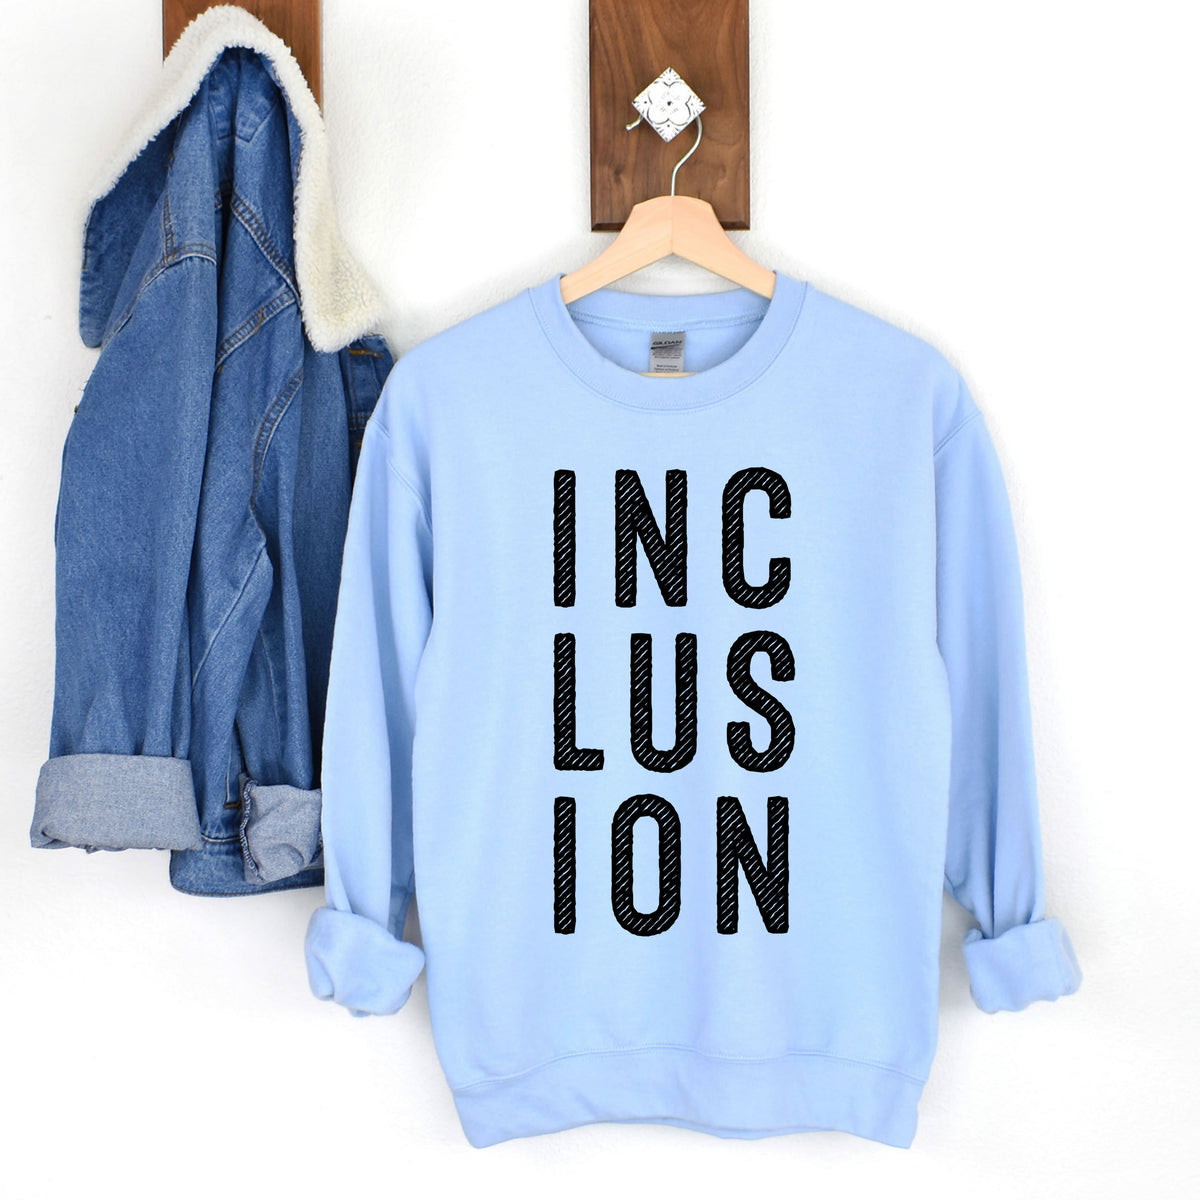 Inclusion Autism Disability Shirt  | Light Blue sweatshirt